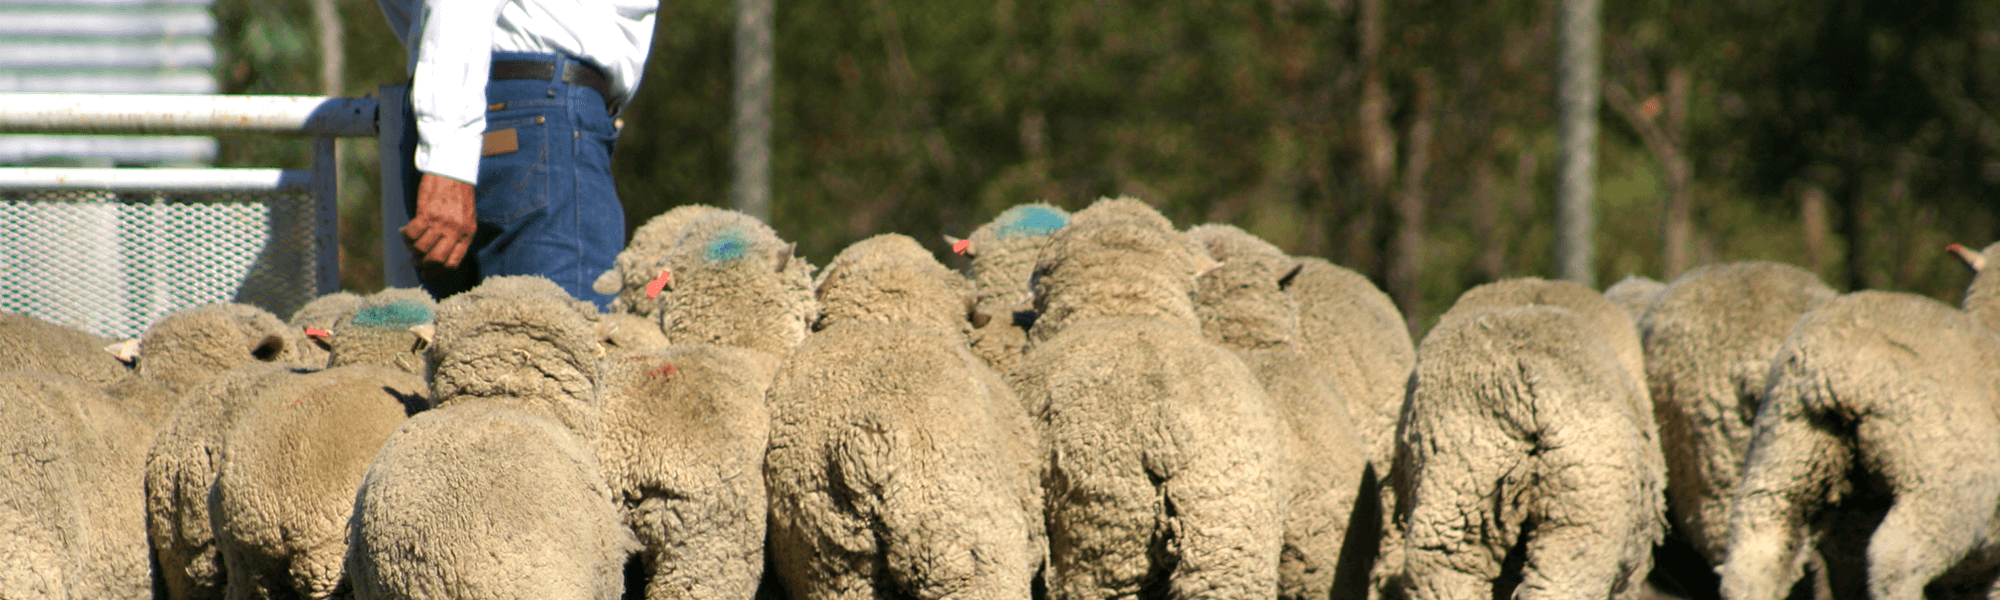 lamb farming in South Australia